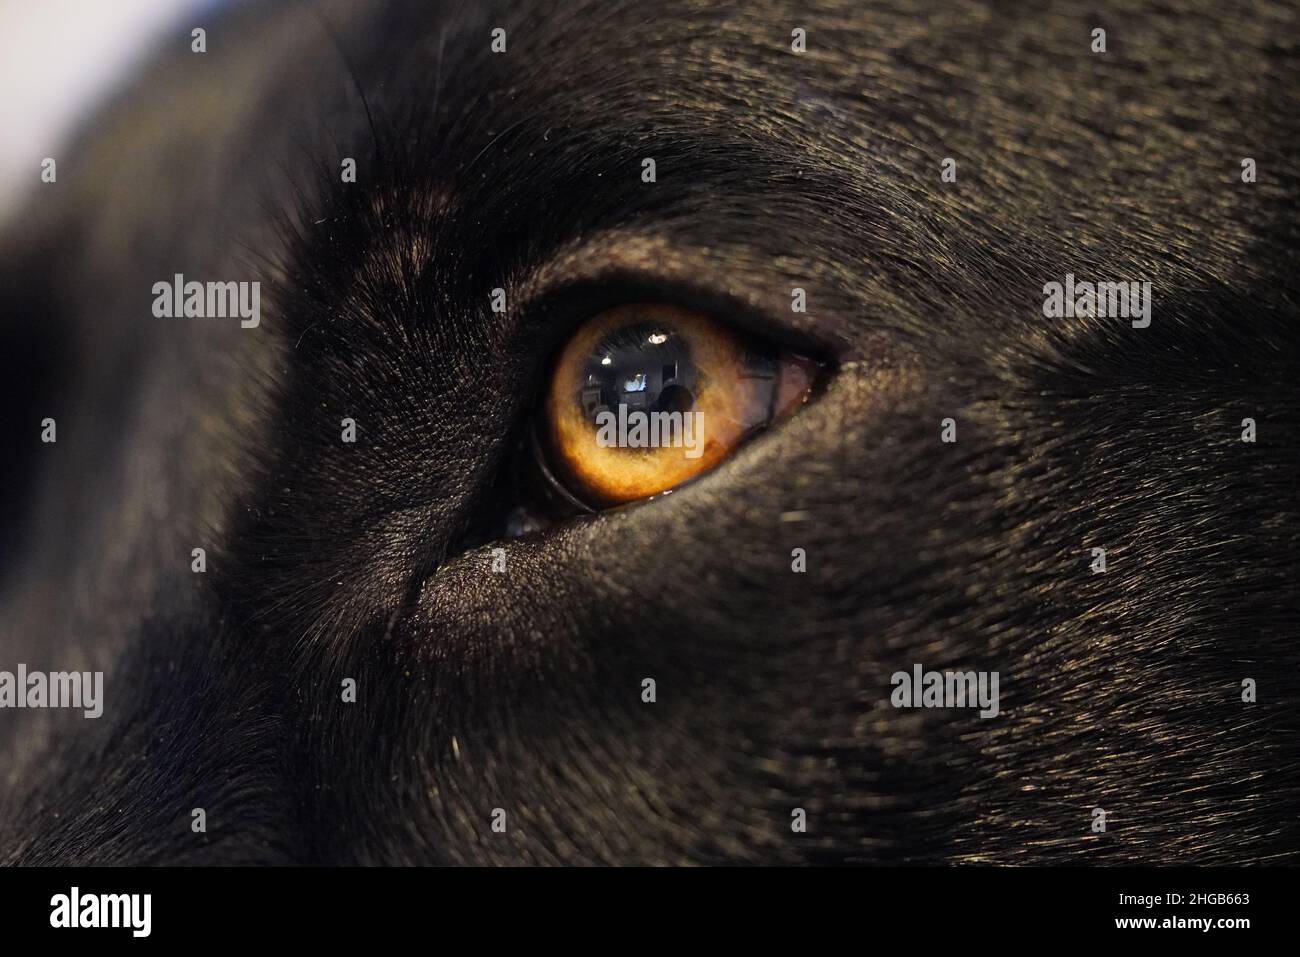 Black Labrador close up with beautiful eyes Stock Photo